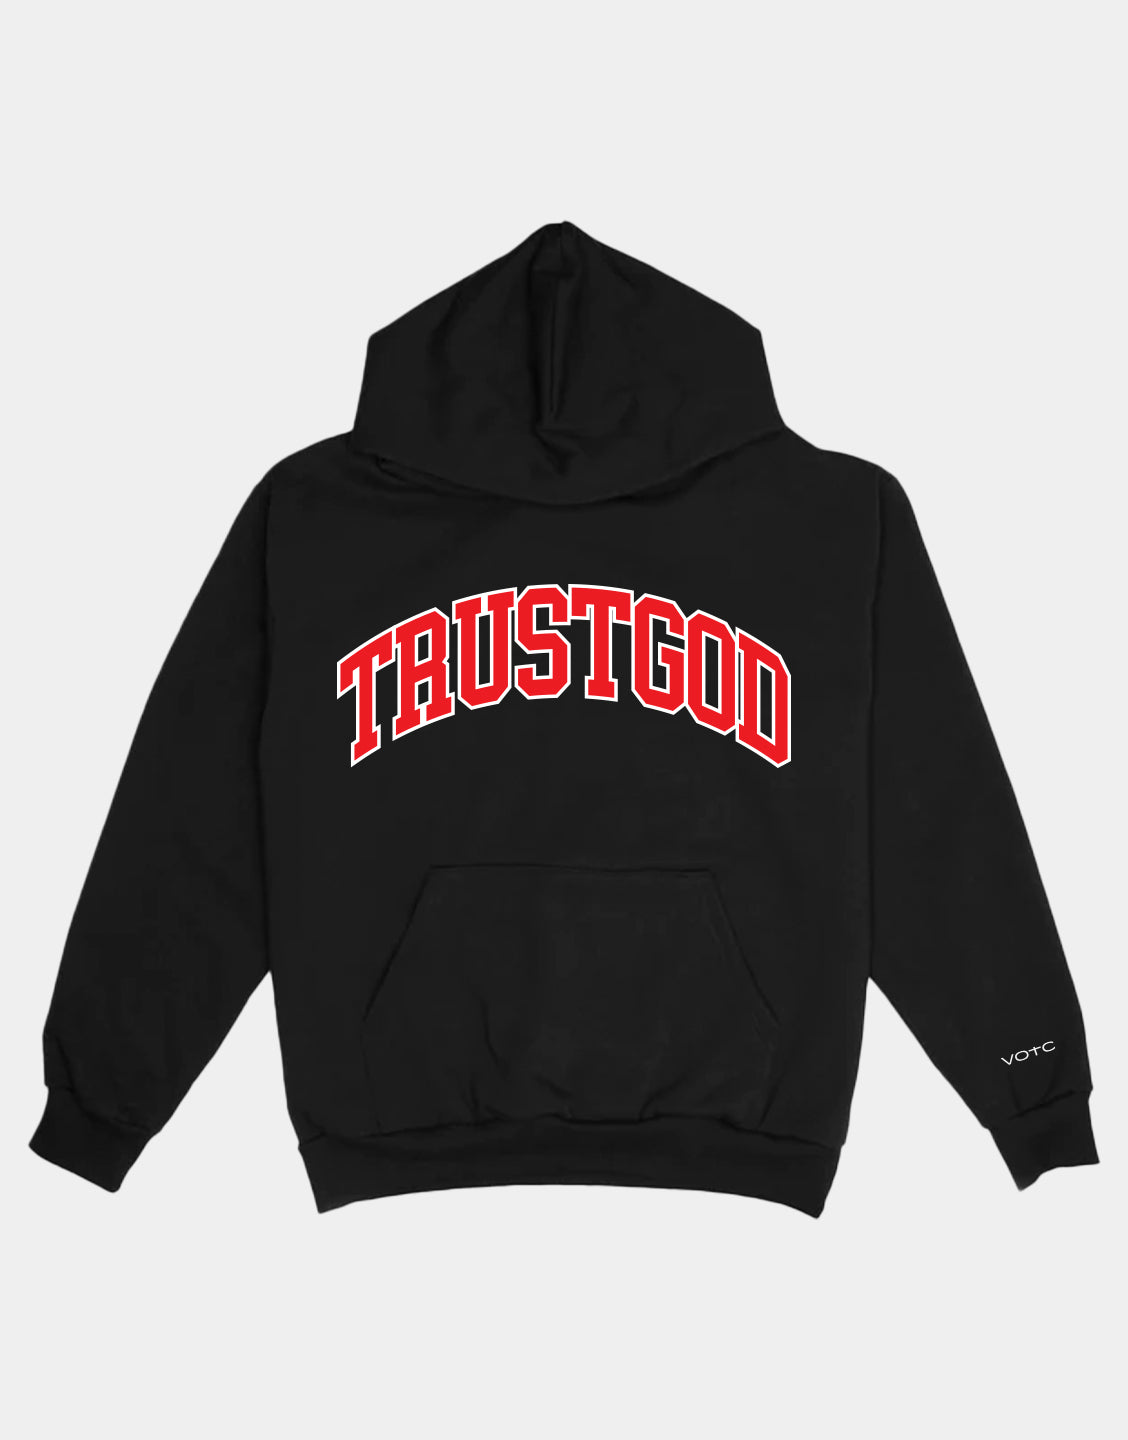 Trust God Sports Hoodie - Power Black - VOTC Clothing